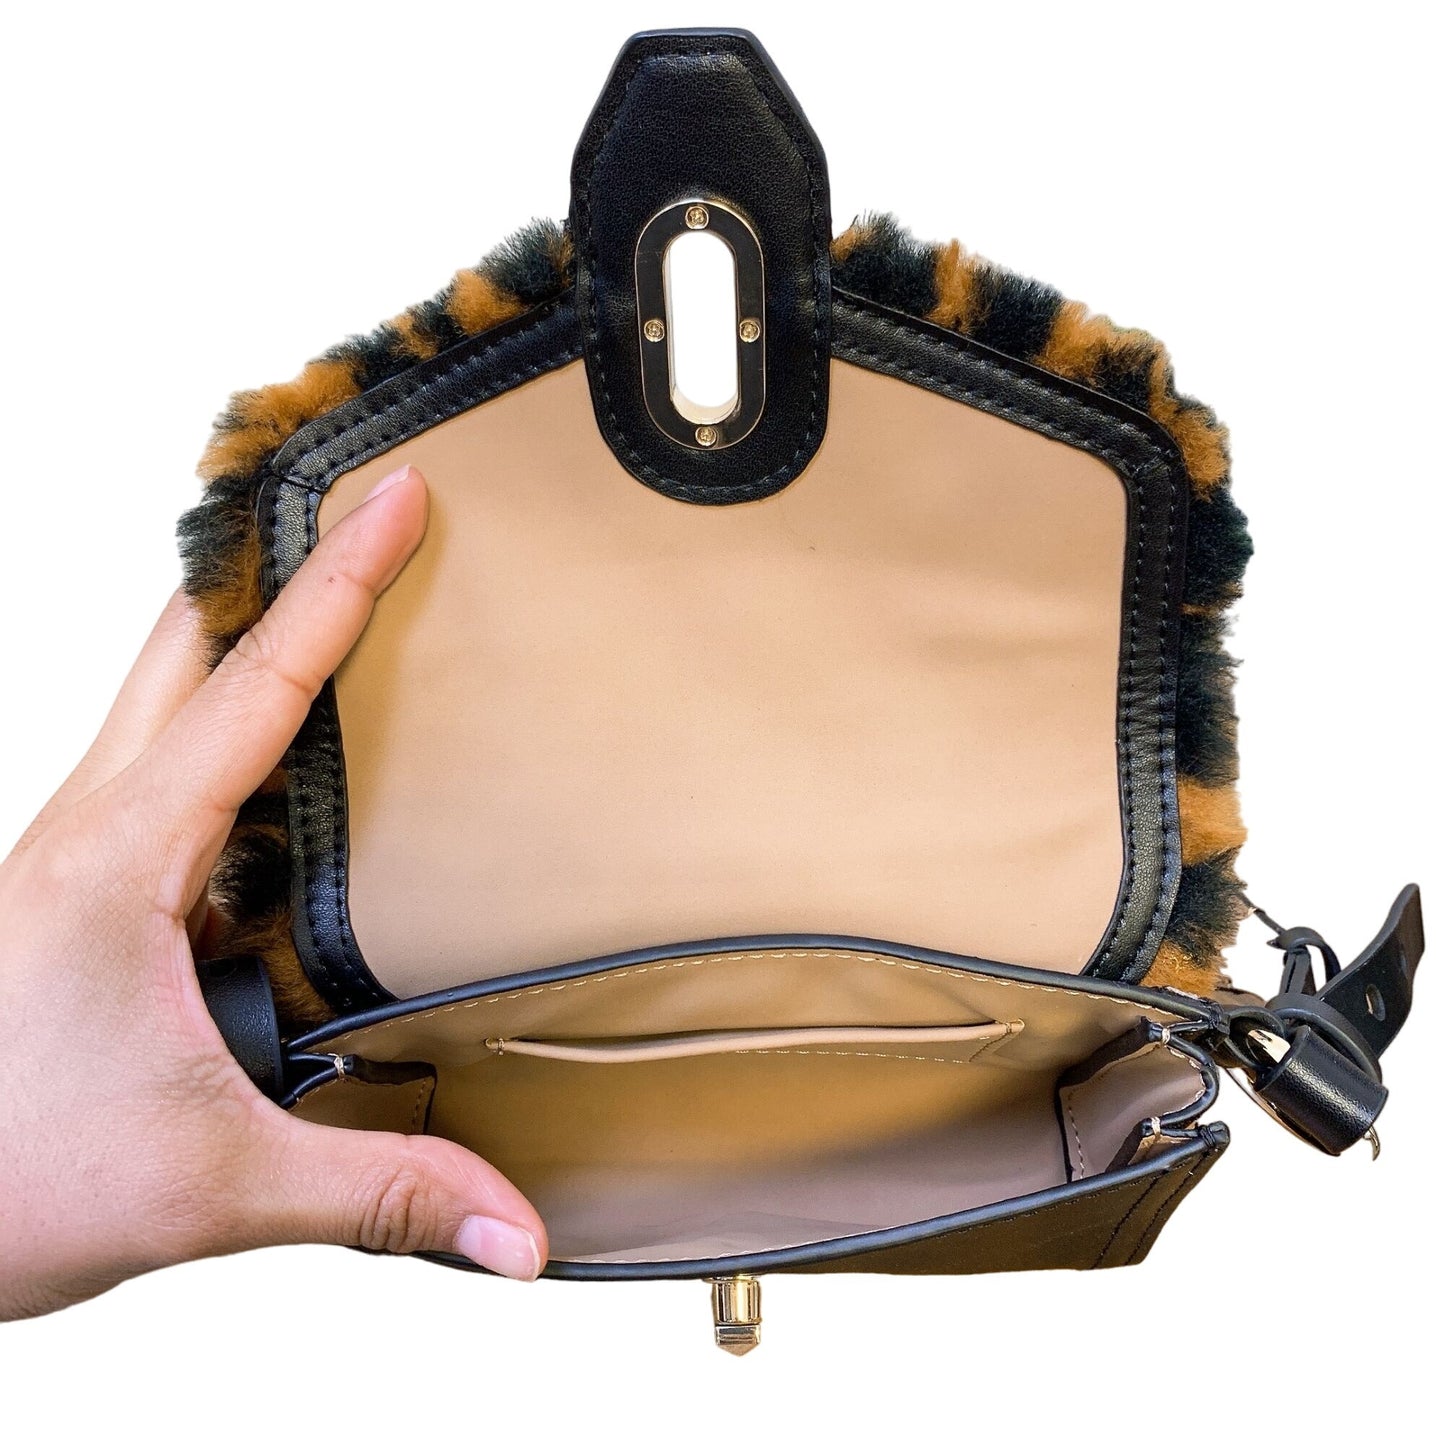 *NWT Michael Kors Black & Brown Shoulder Handbag Small